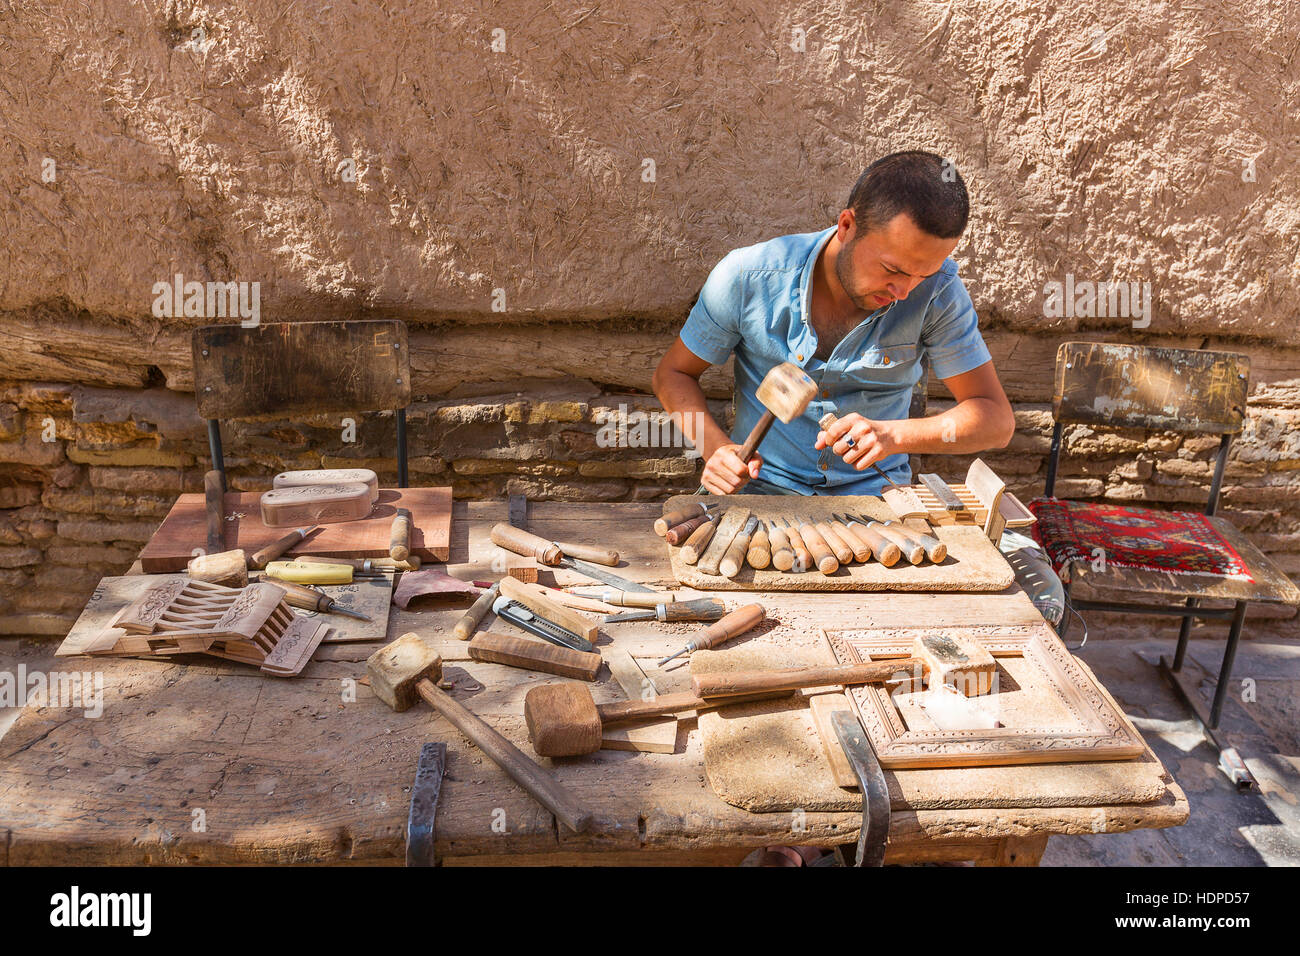 Artist carving the wood in Khiva, Uzbekistan. Stock Photo